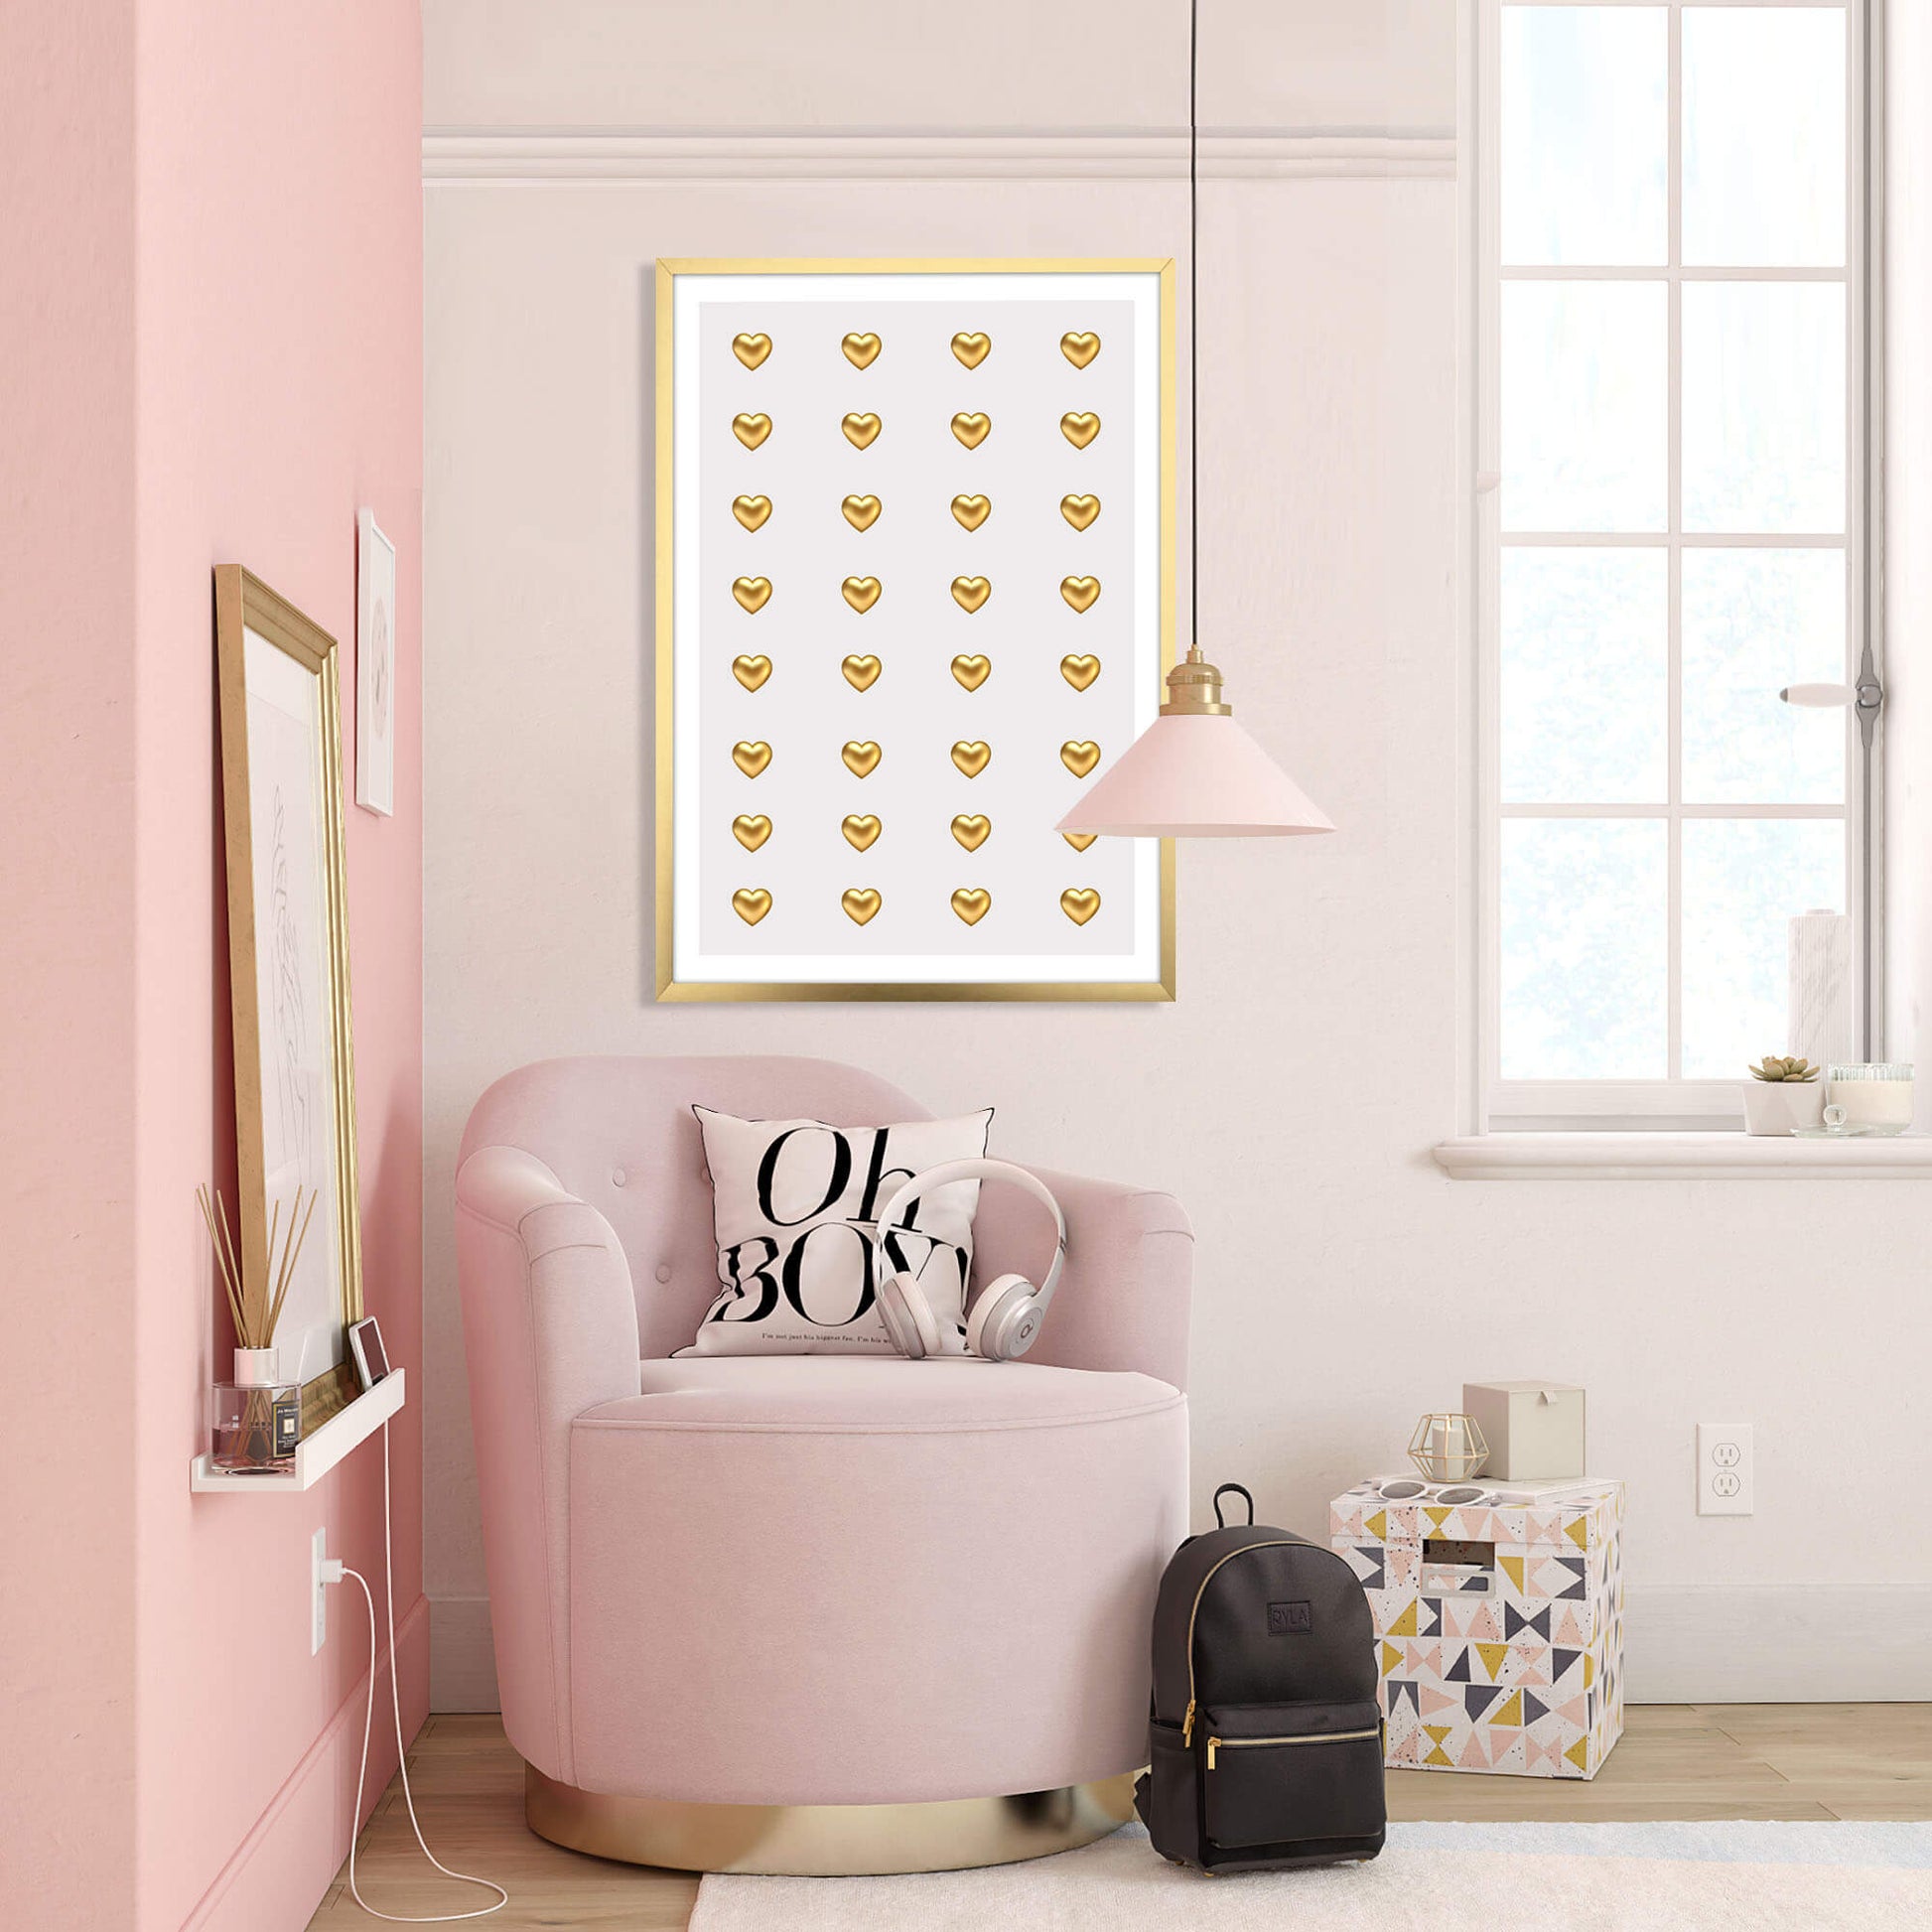 Girls Gold metal wall art heart poster in pink bedroom